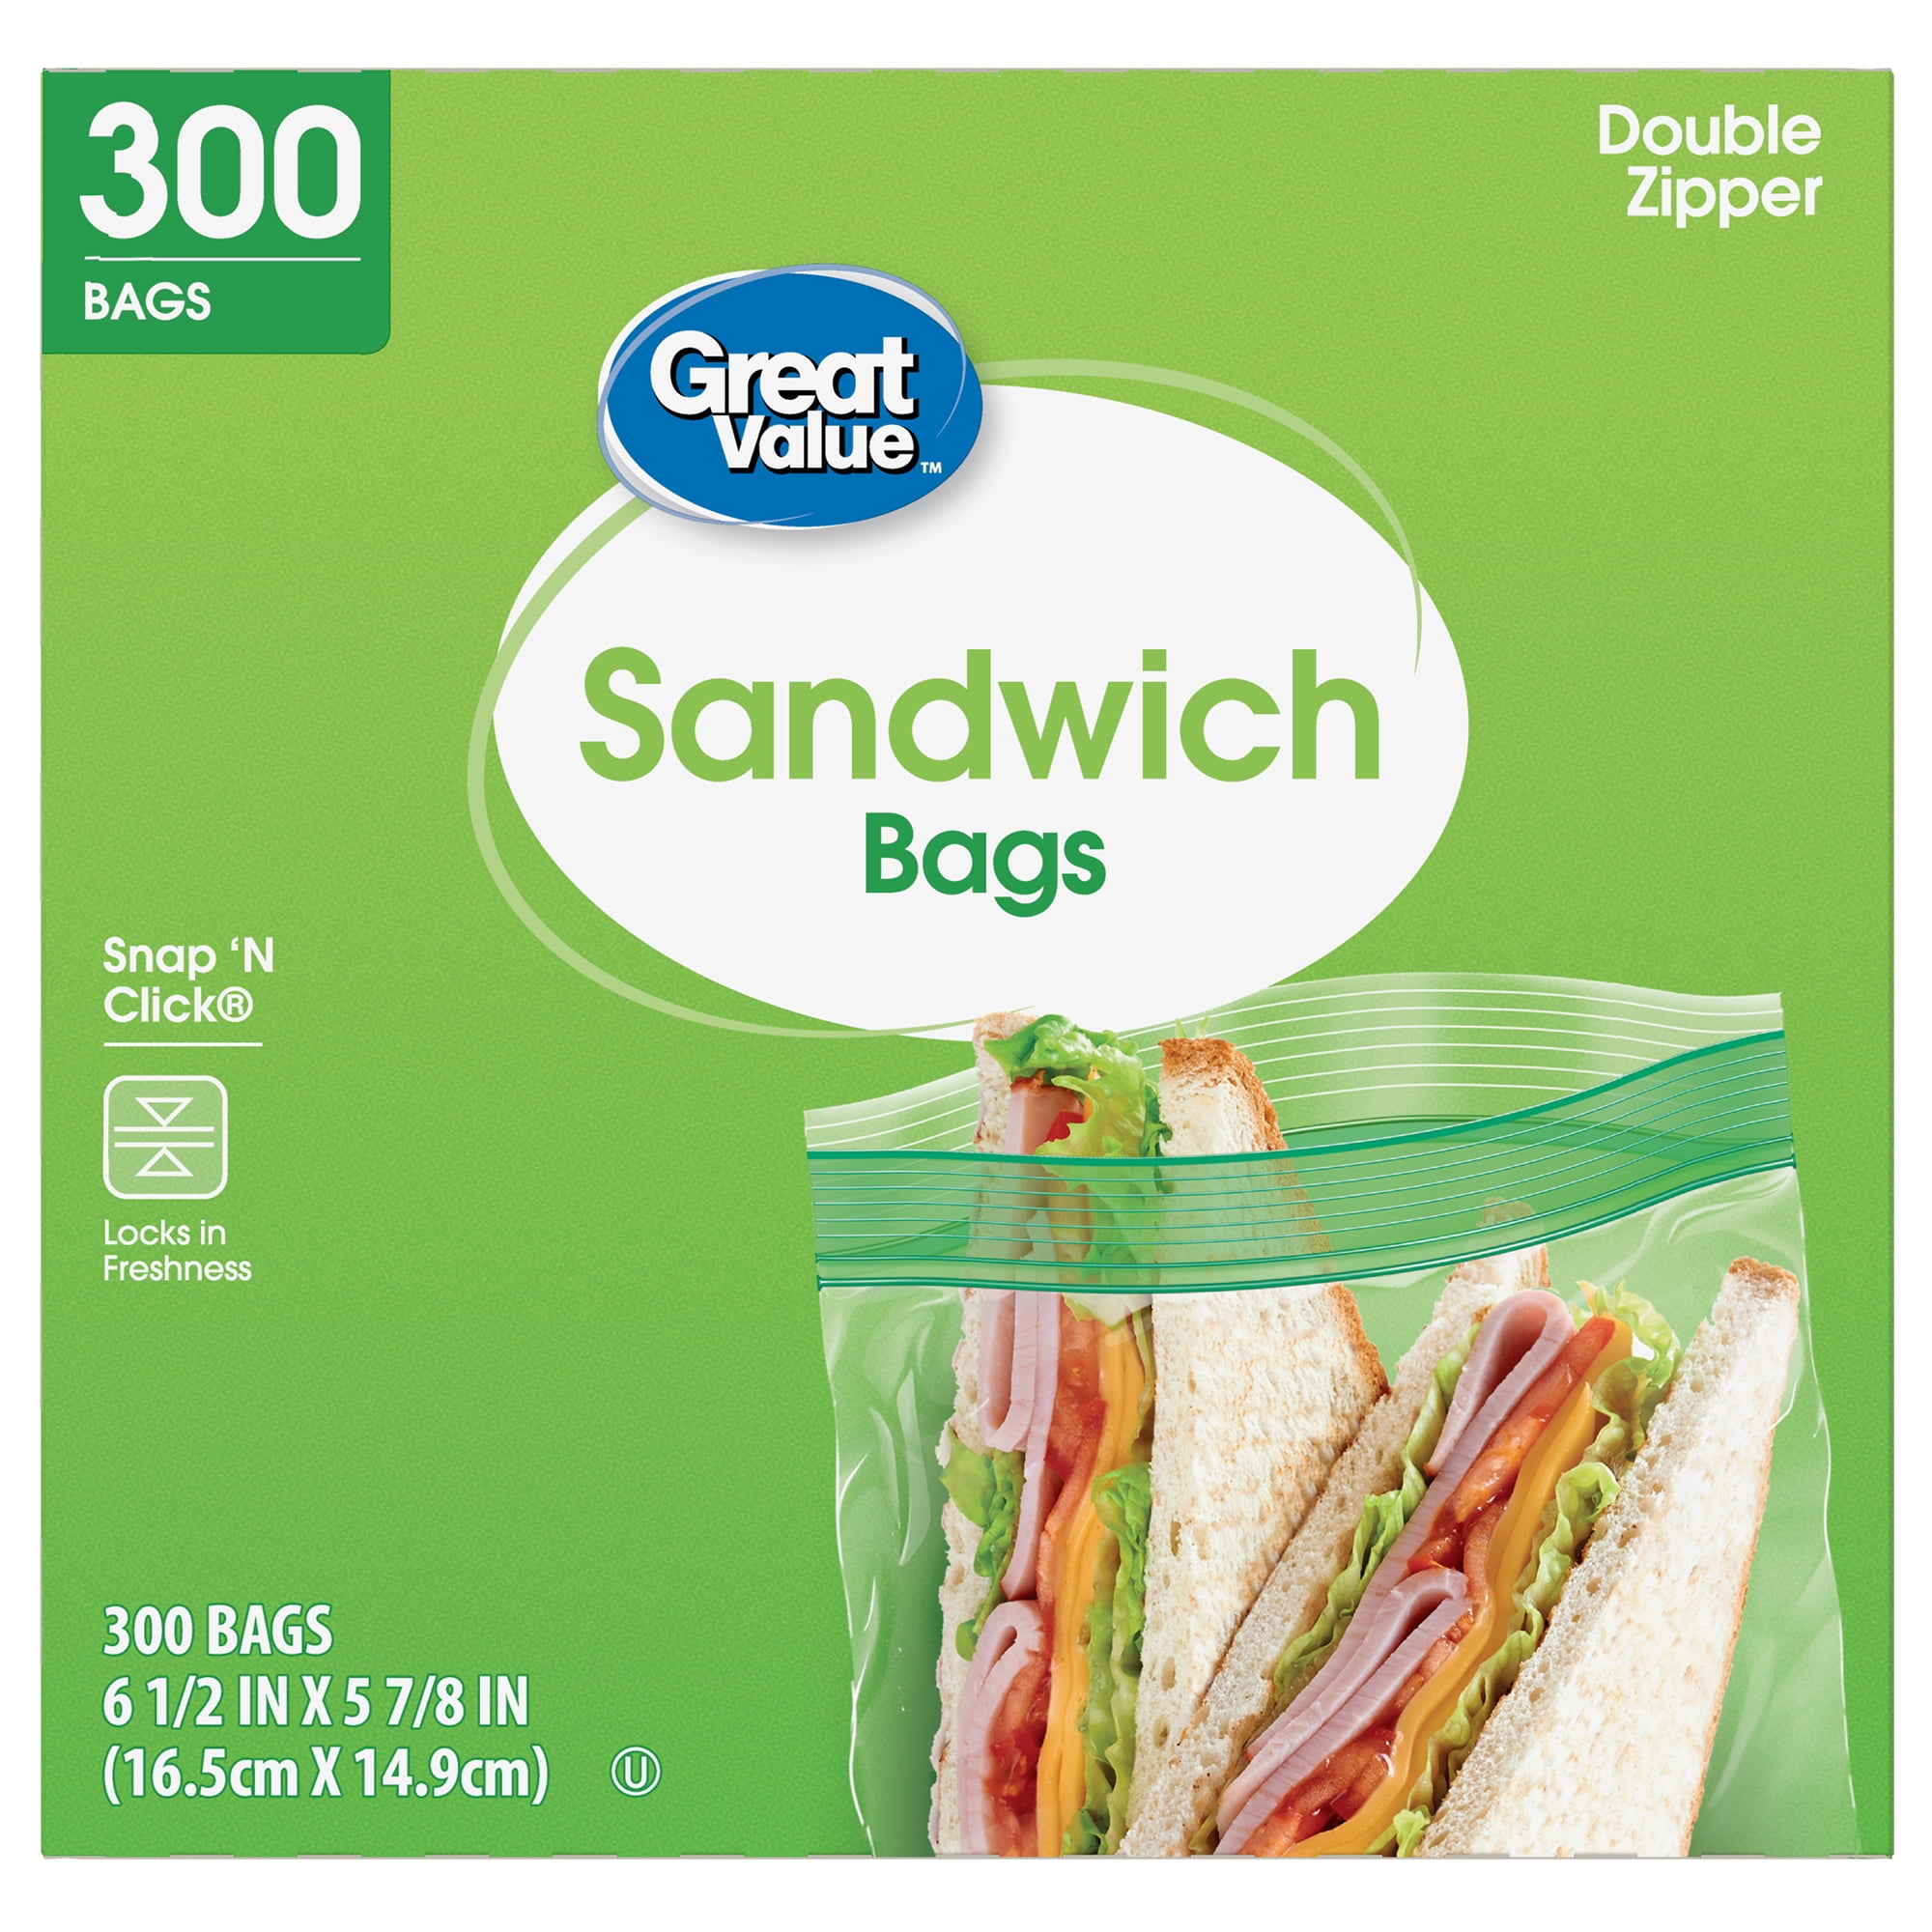 Great Value Double Zipper Sandwich Bags, 300 Count